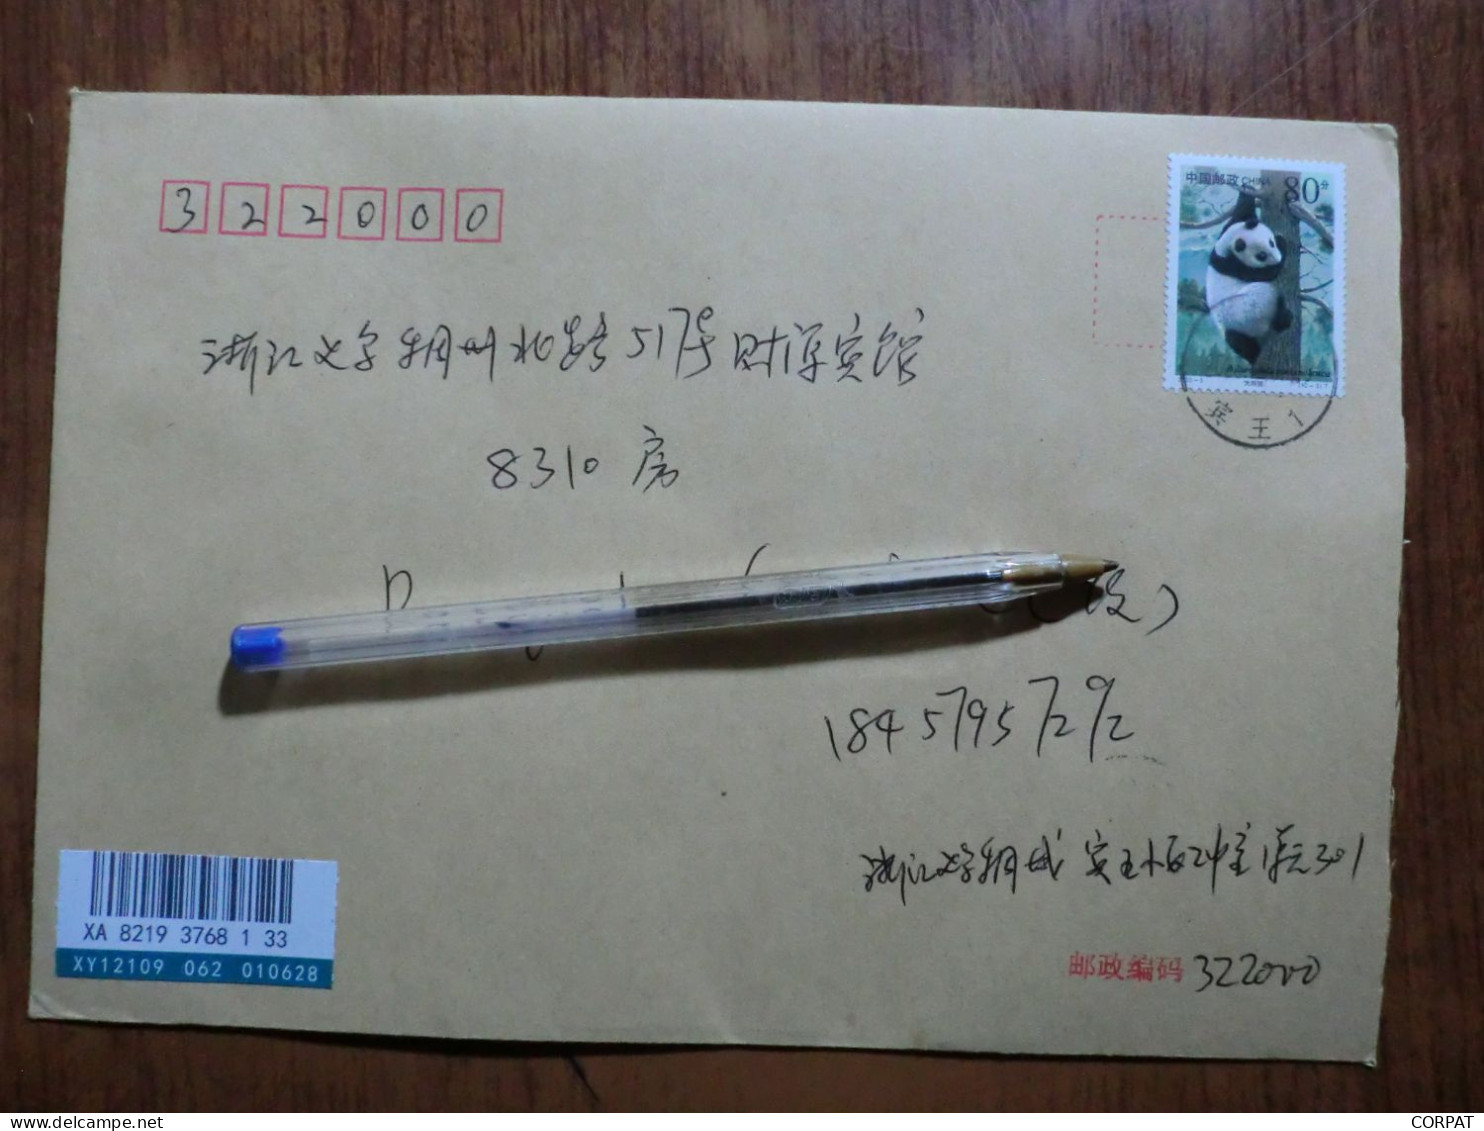 China.Souvenir Sheet   On Registered Envelope - Brieven En Documenten